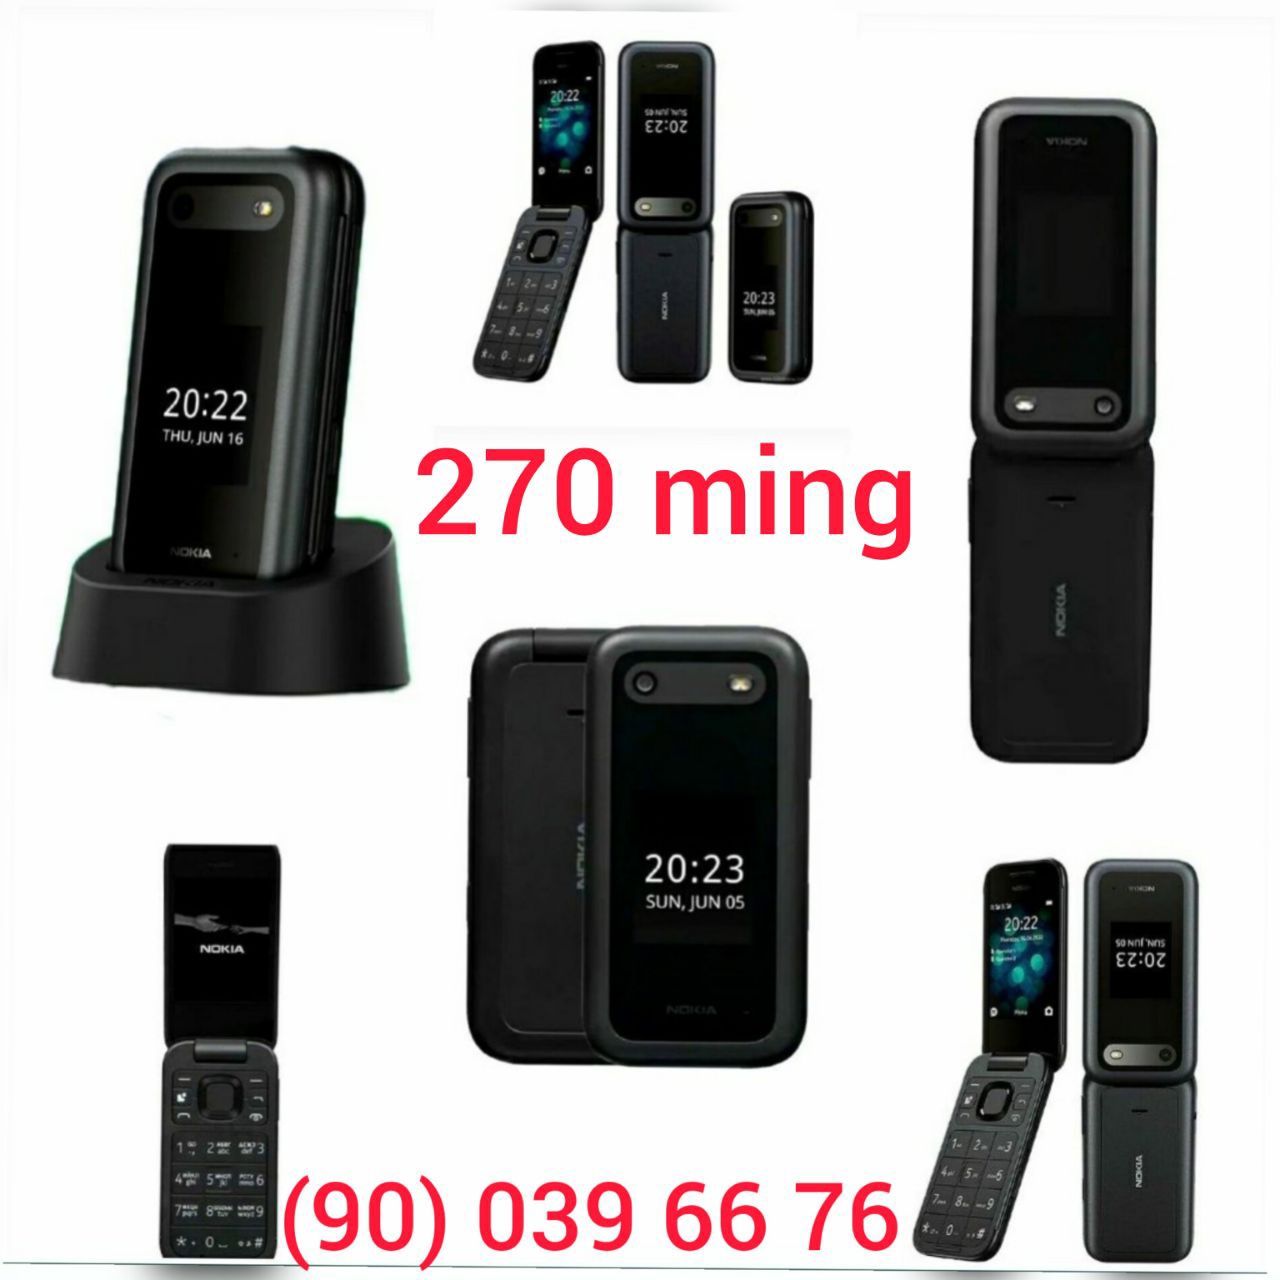 Nokia 105, Nokia 2720 flip, Gusto 3 (B311V) Samsung, Nokia 2660 flip.